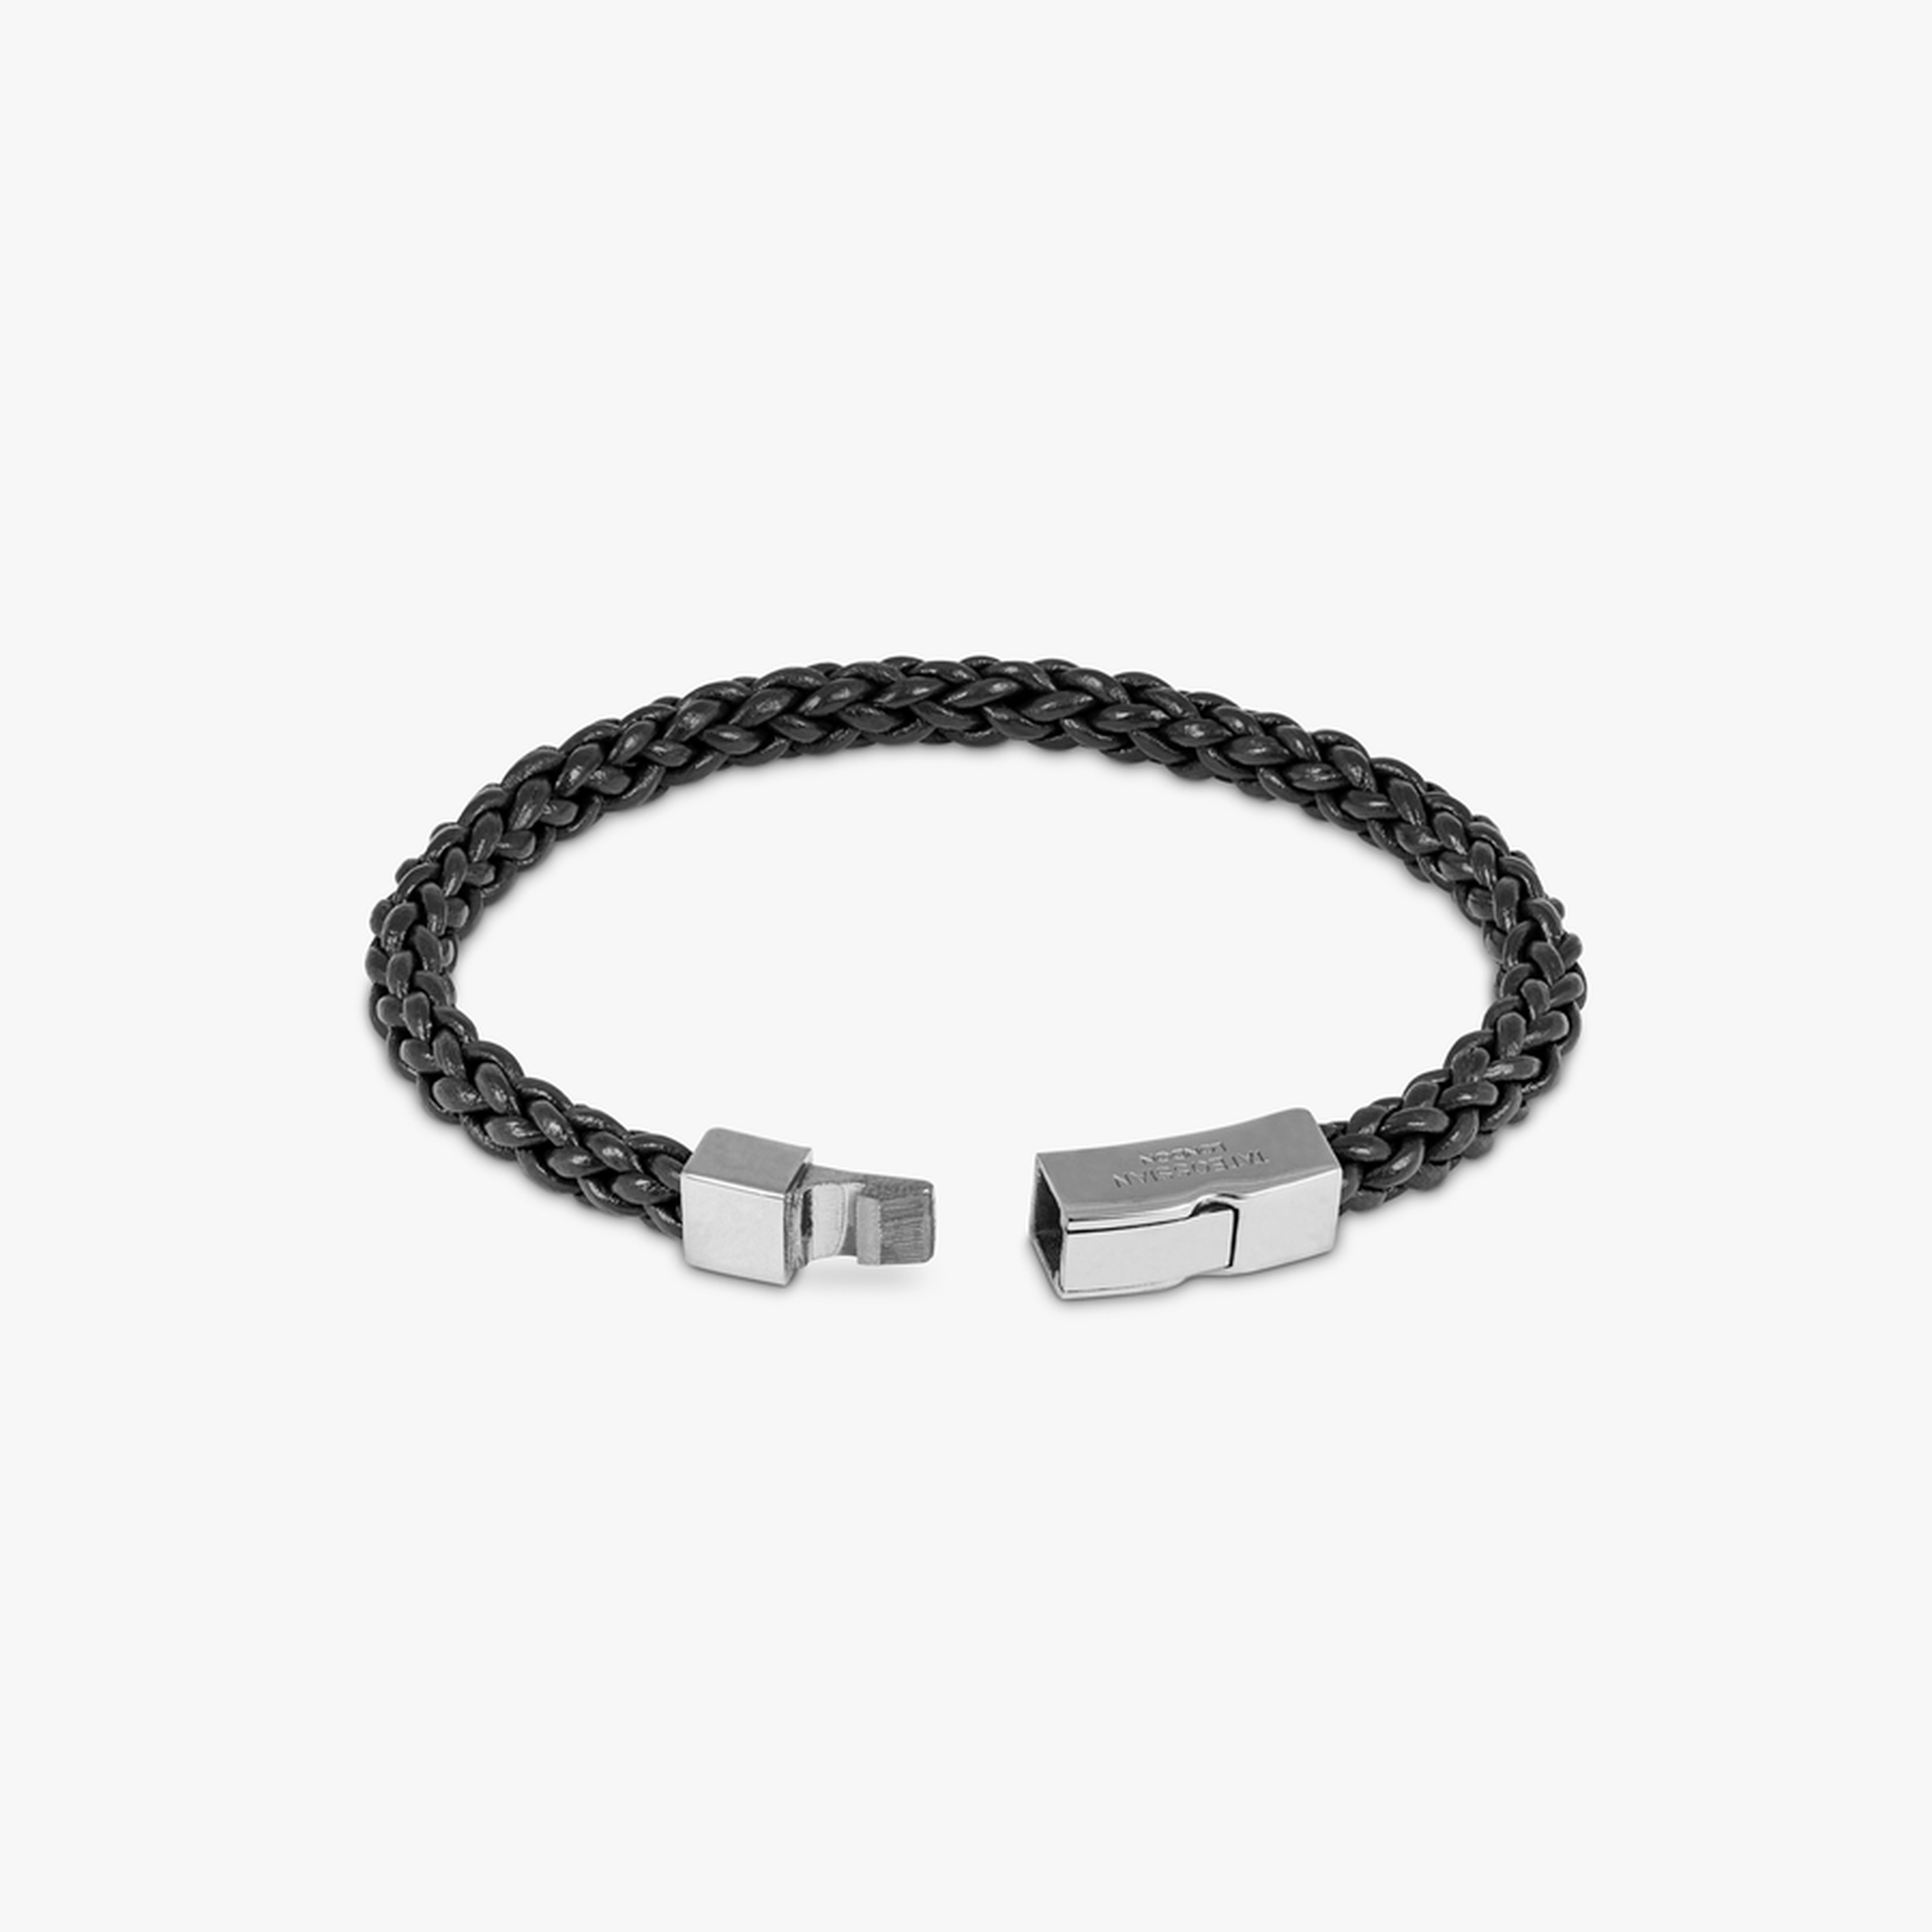 Click Trenza Bracelet in Italian Black Leather with Black Rhodium Plated Sterling Silver-Bracelets-Tateossian-Cufflinks.com.sg